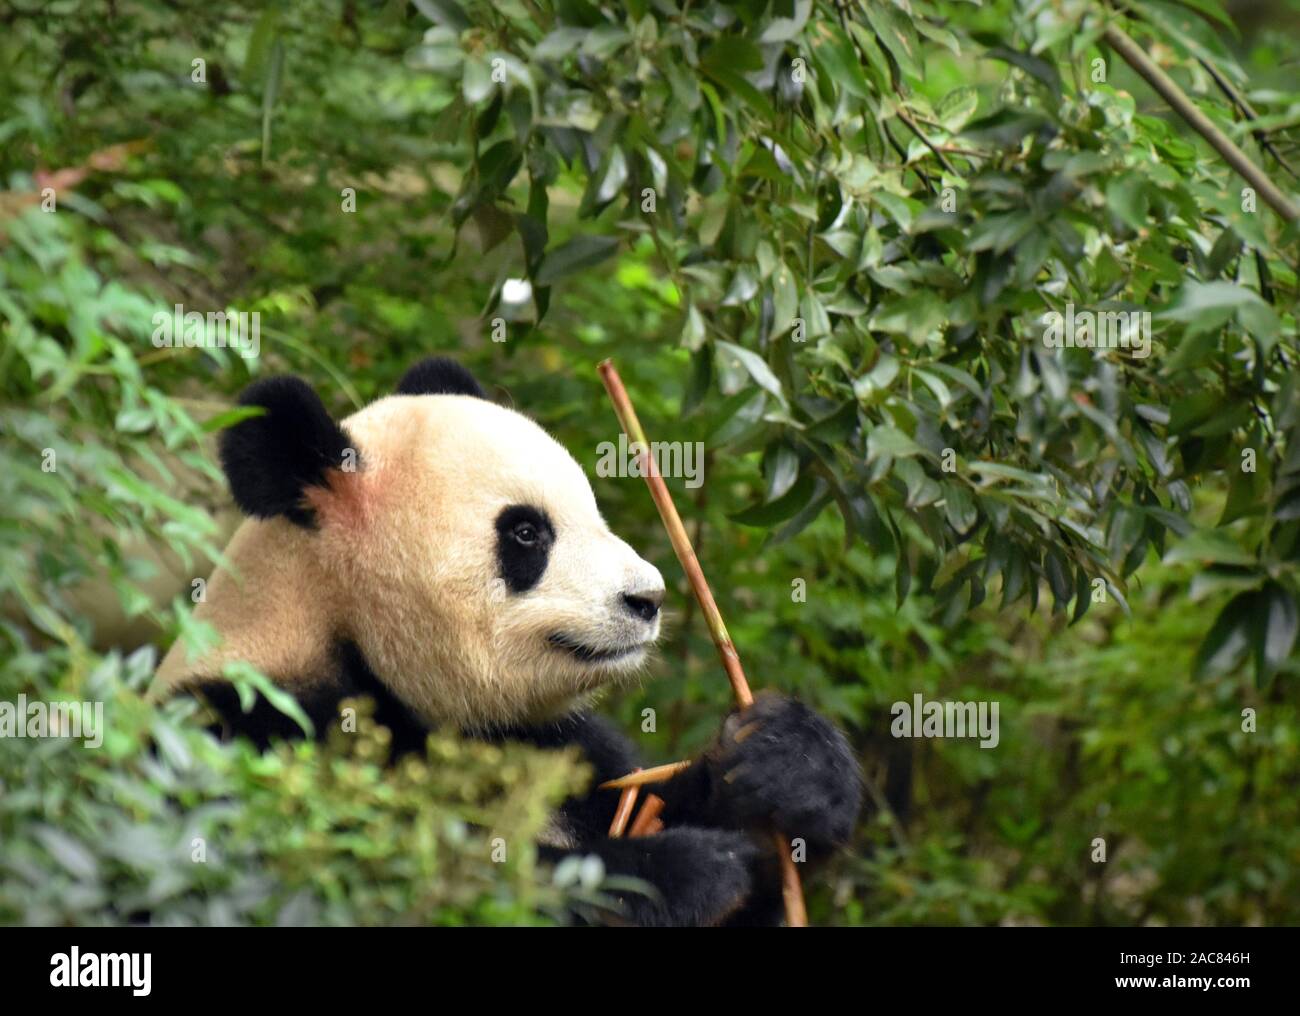 Cute panda bear eating bamboo in forest, Chengdu, China Stock Photo